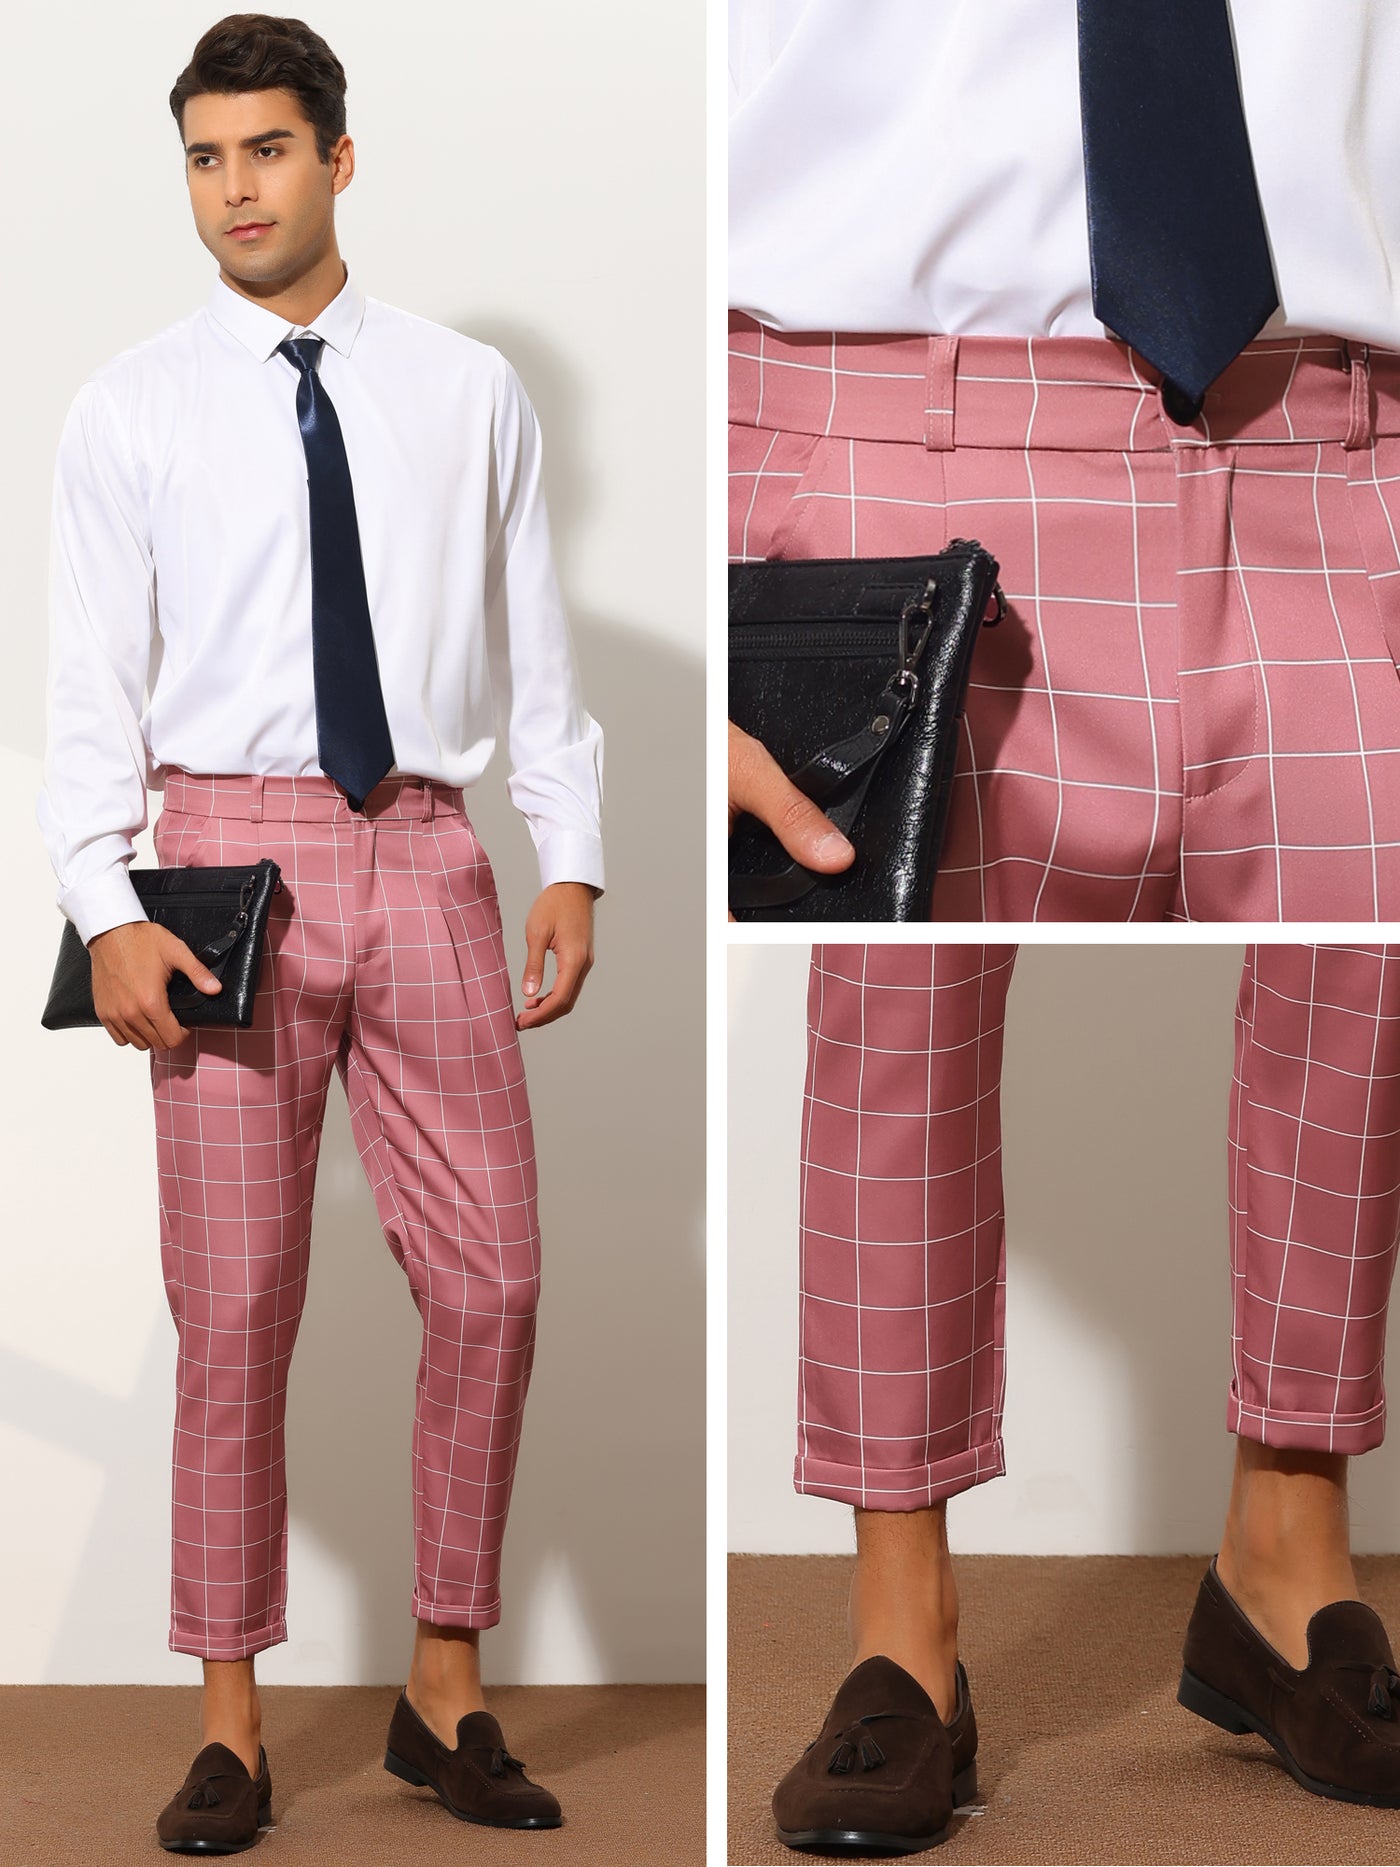 Bublédon Plaid Dress Pants for Men's Cropped Ankle Length Business Trousers